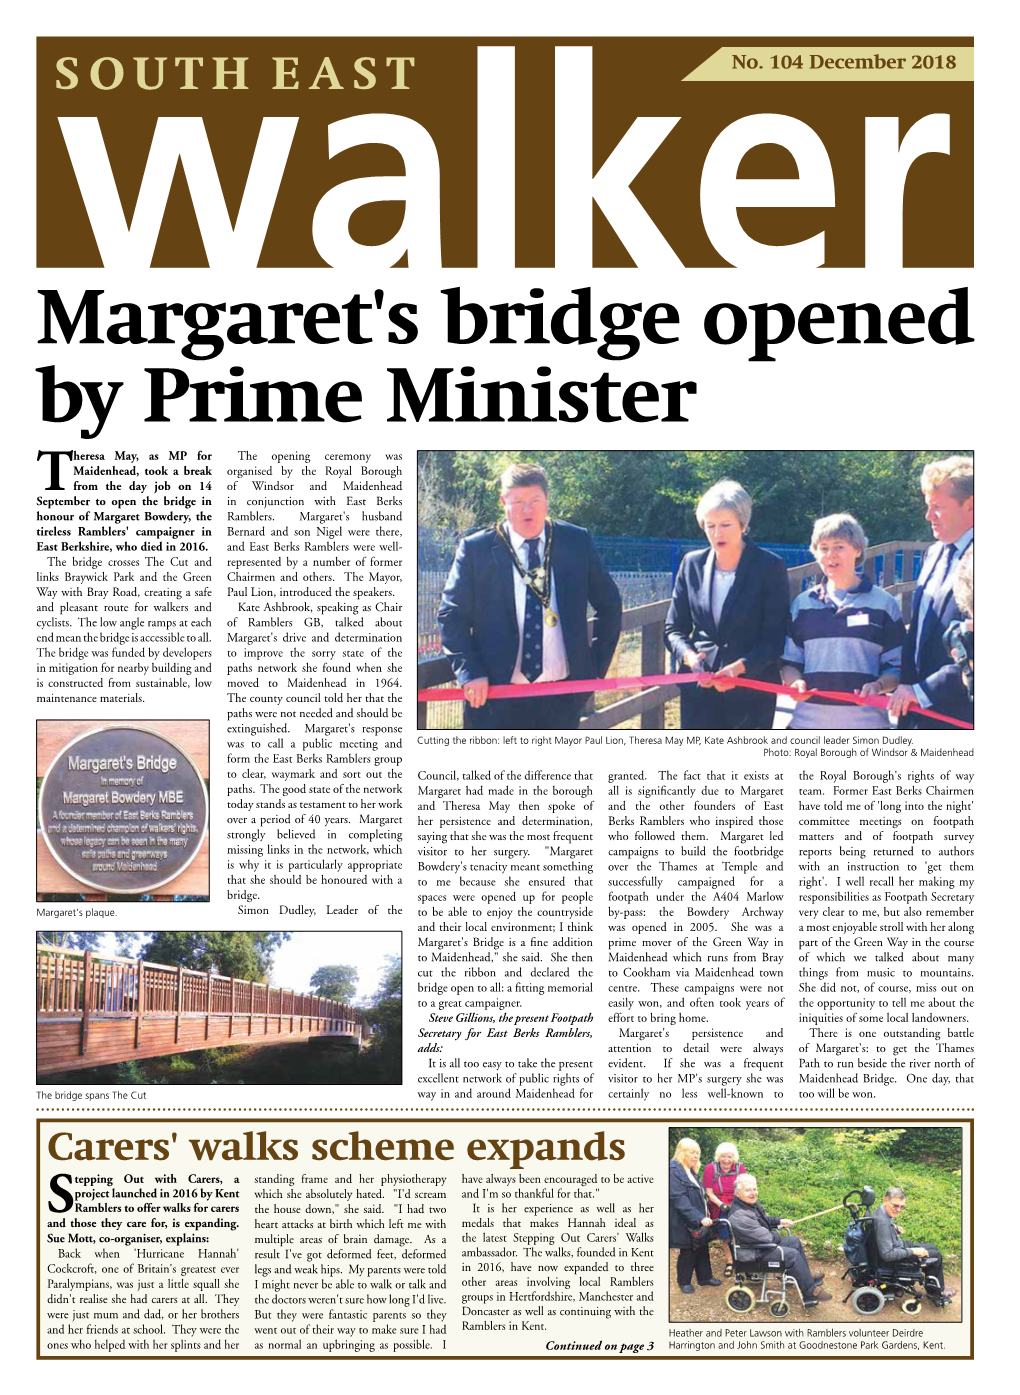 Margaret's Bridge Opened by Prime Minister